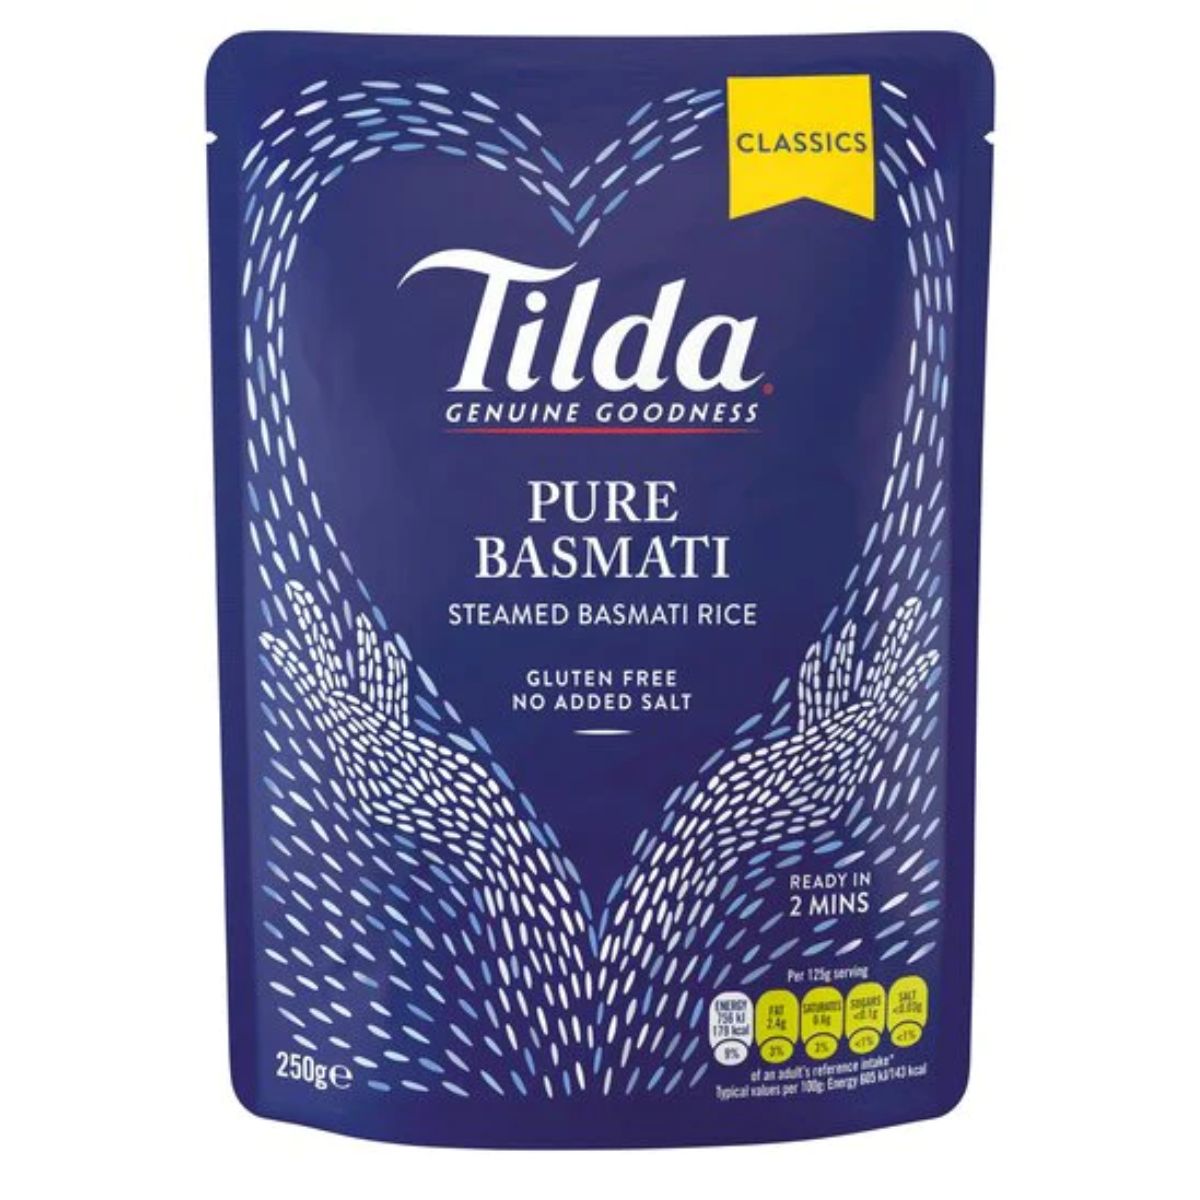 Tilda - Classics Pure Basmati Rice - 250g pure basmati rice.